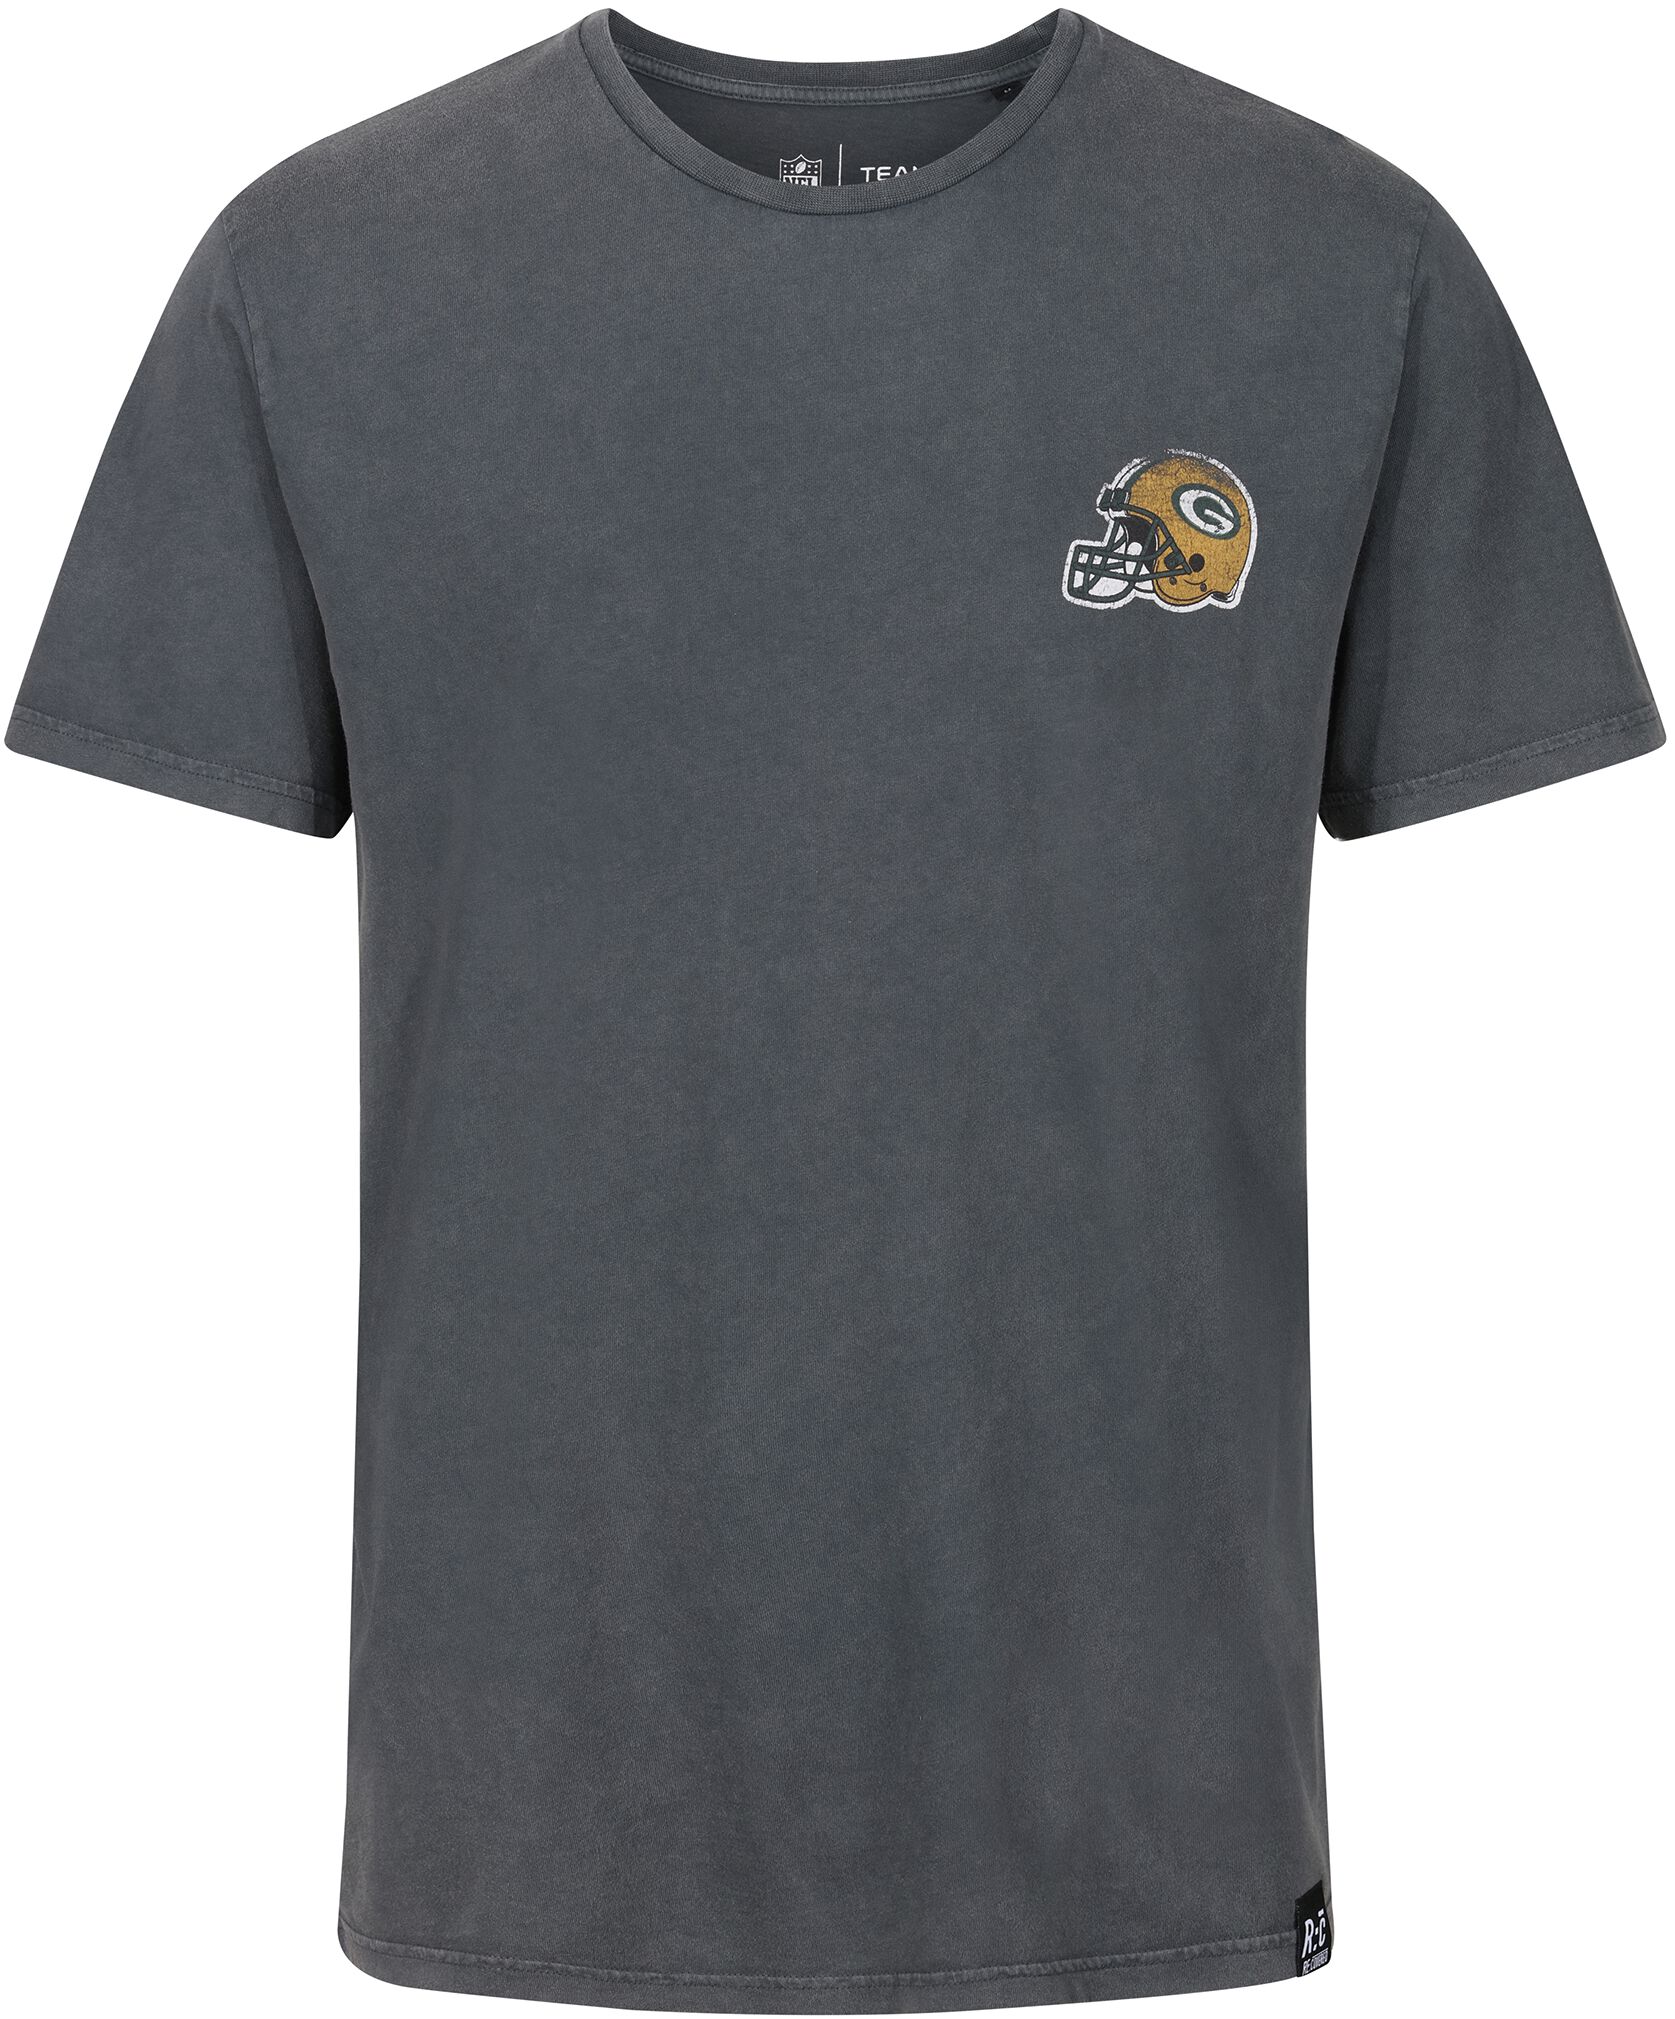 Recovered Clothing T-Shirt - NFL Packers College Black Washed - S bis XXL - für Männer - Größe L - multicolor